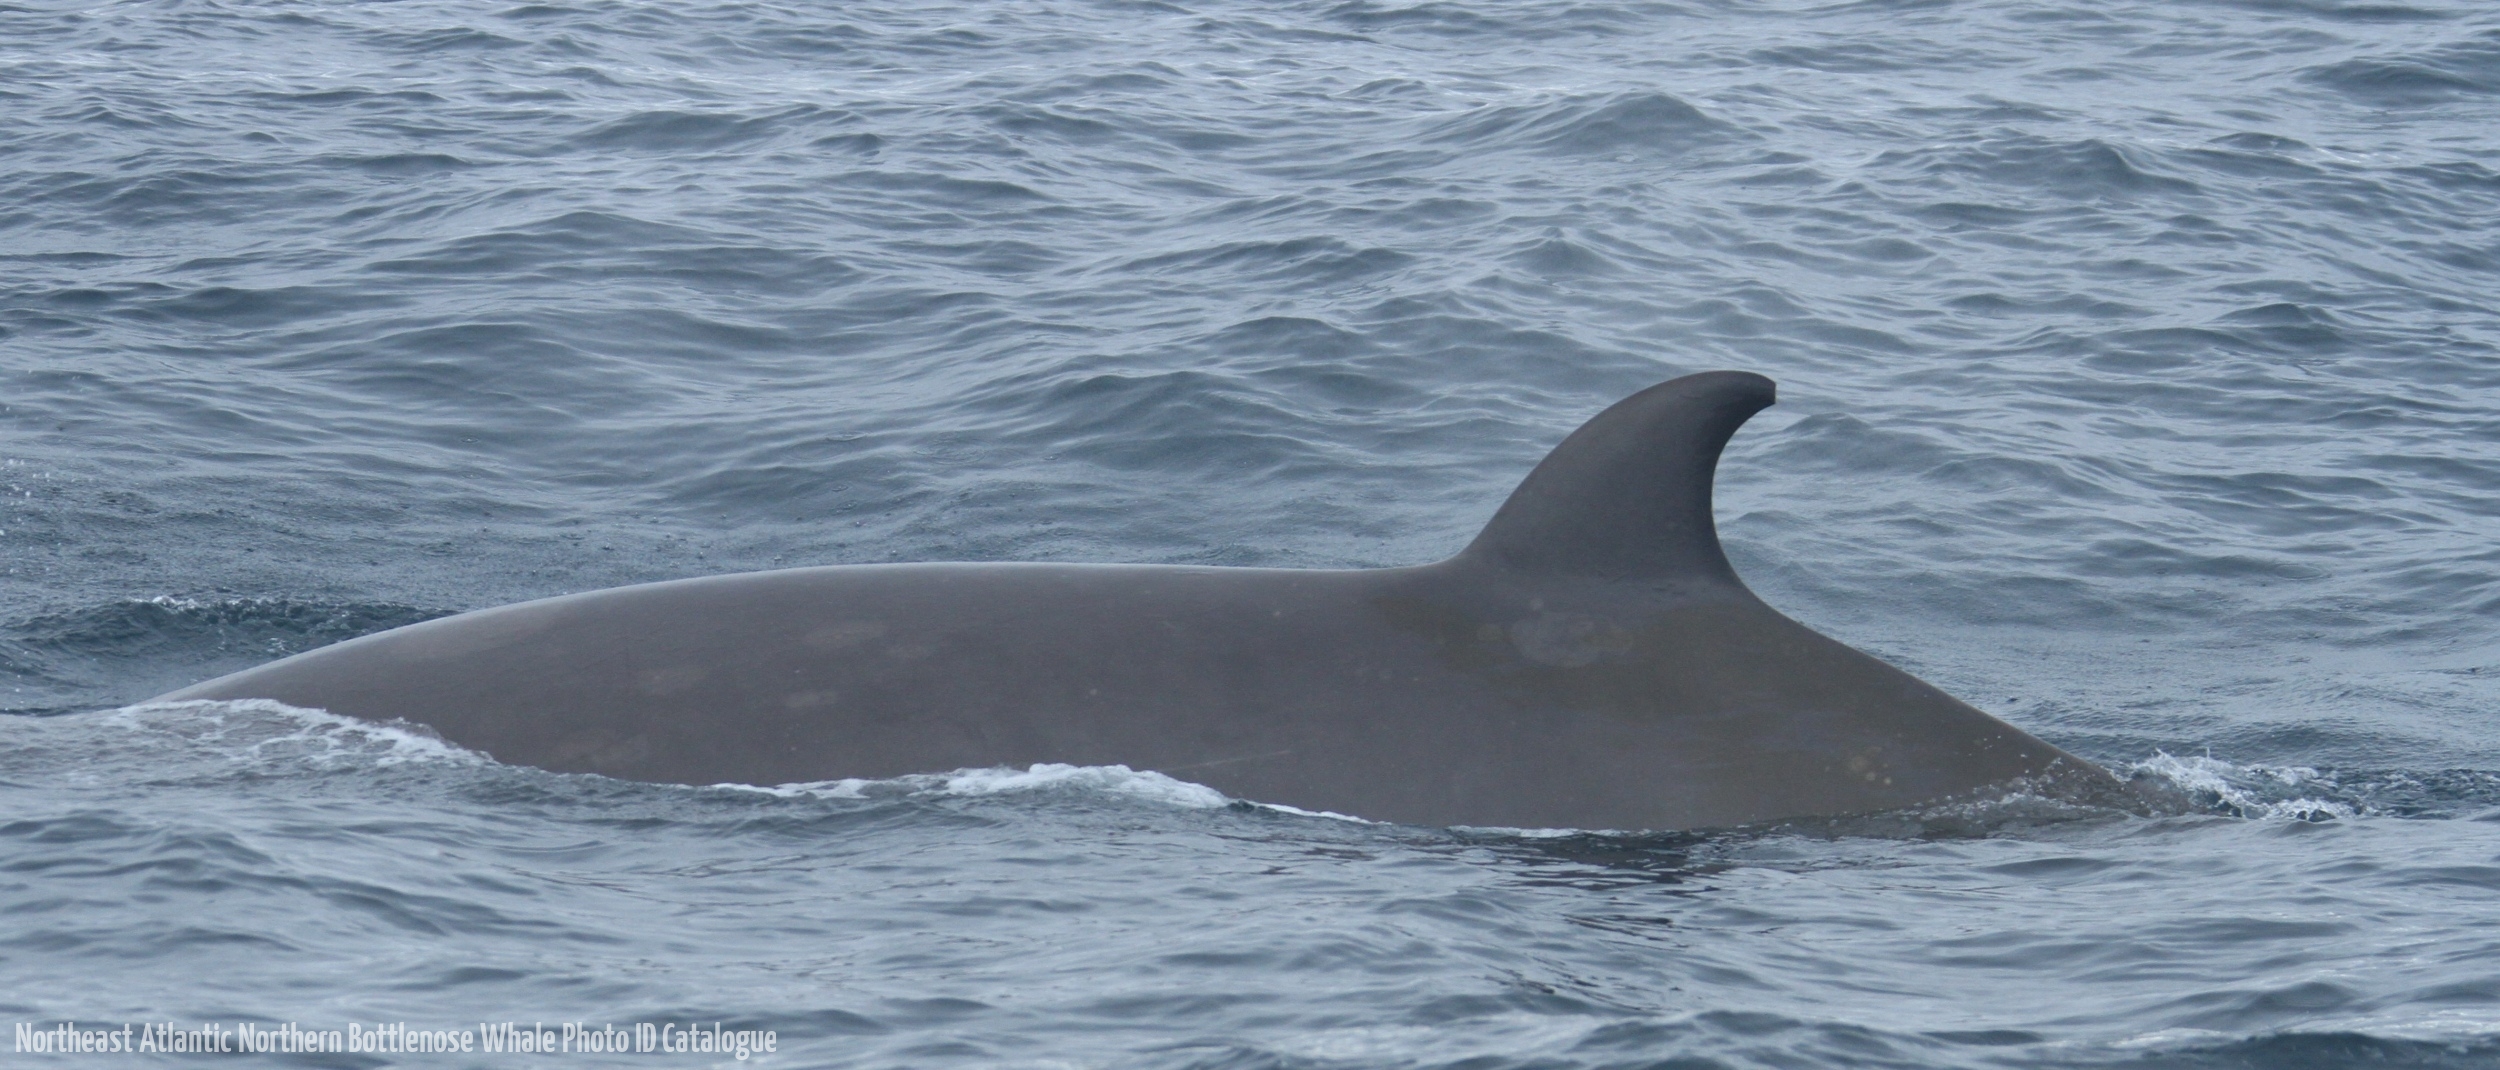 Whale ID: 0018,  Date taken: 03-07-2013,  Photographer: Paul H. Ensor